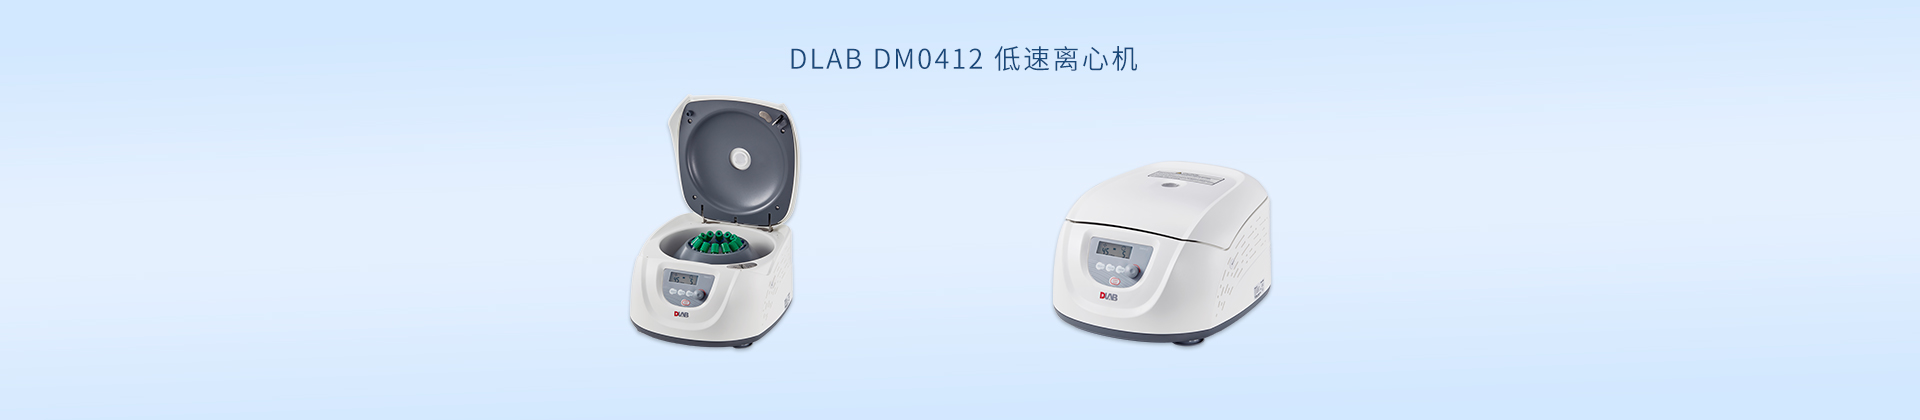 DLAB DM0412 低速离心机